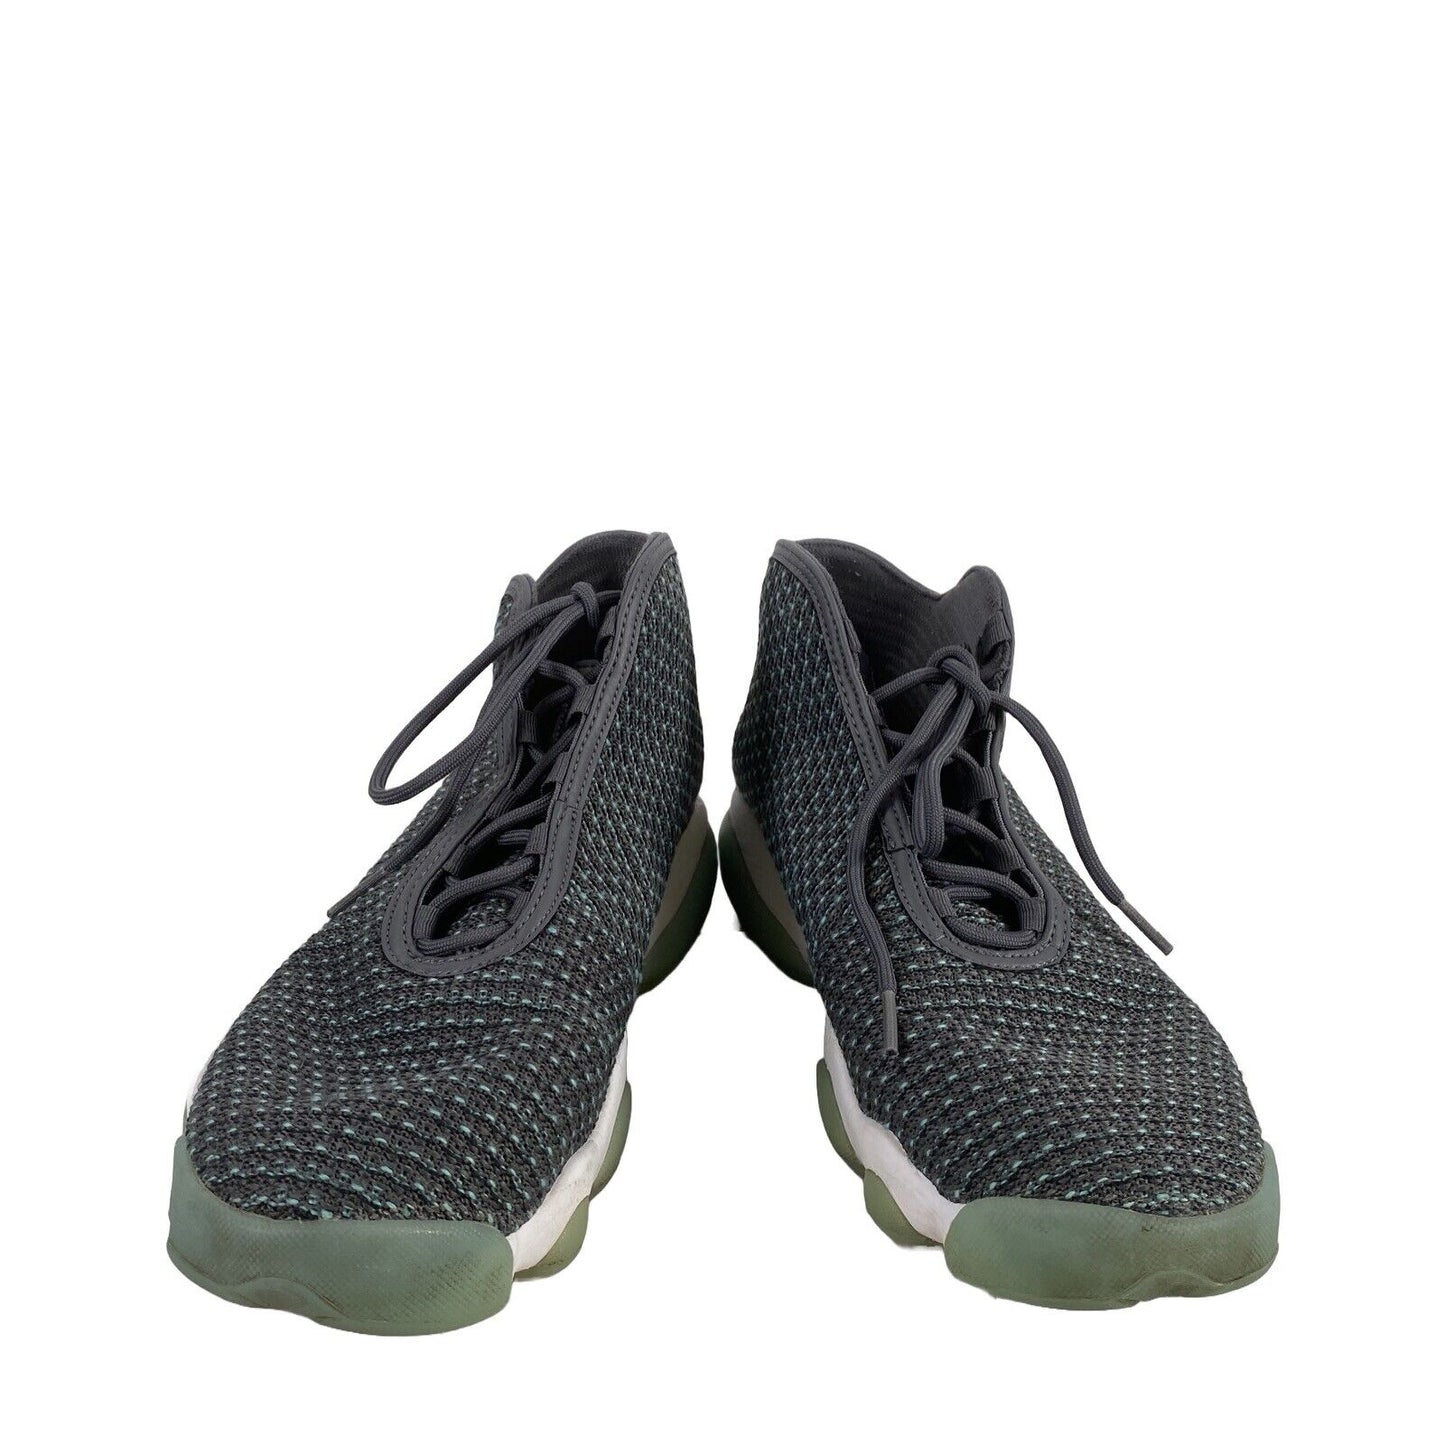 Nike Jordan Men's Gray/Blue Horizon 823581 Lace Up Athletic Shoes - 10.5